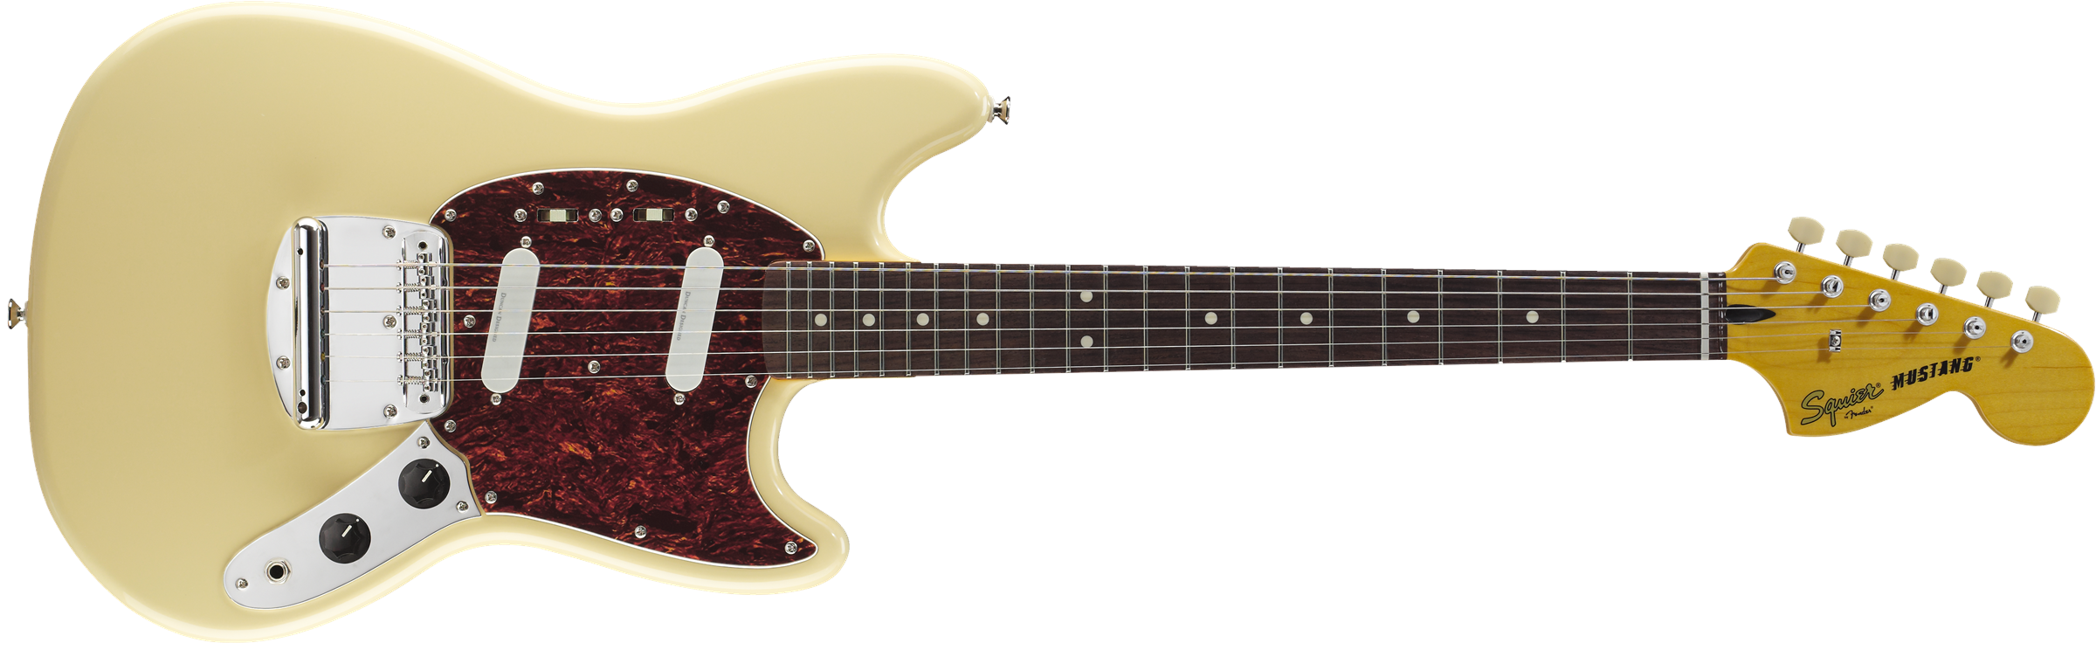 Squier By Fender - Vintage Modified Mustang - Elektrisk Guitar (Vintage White)